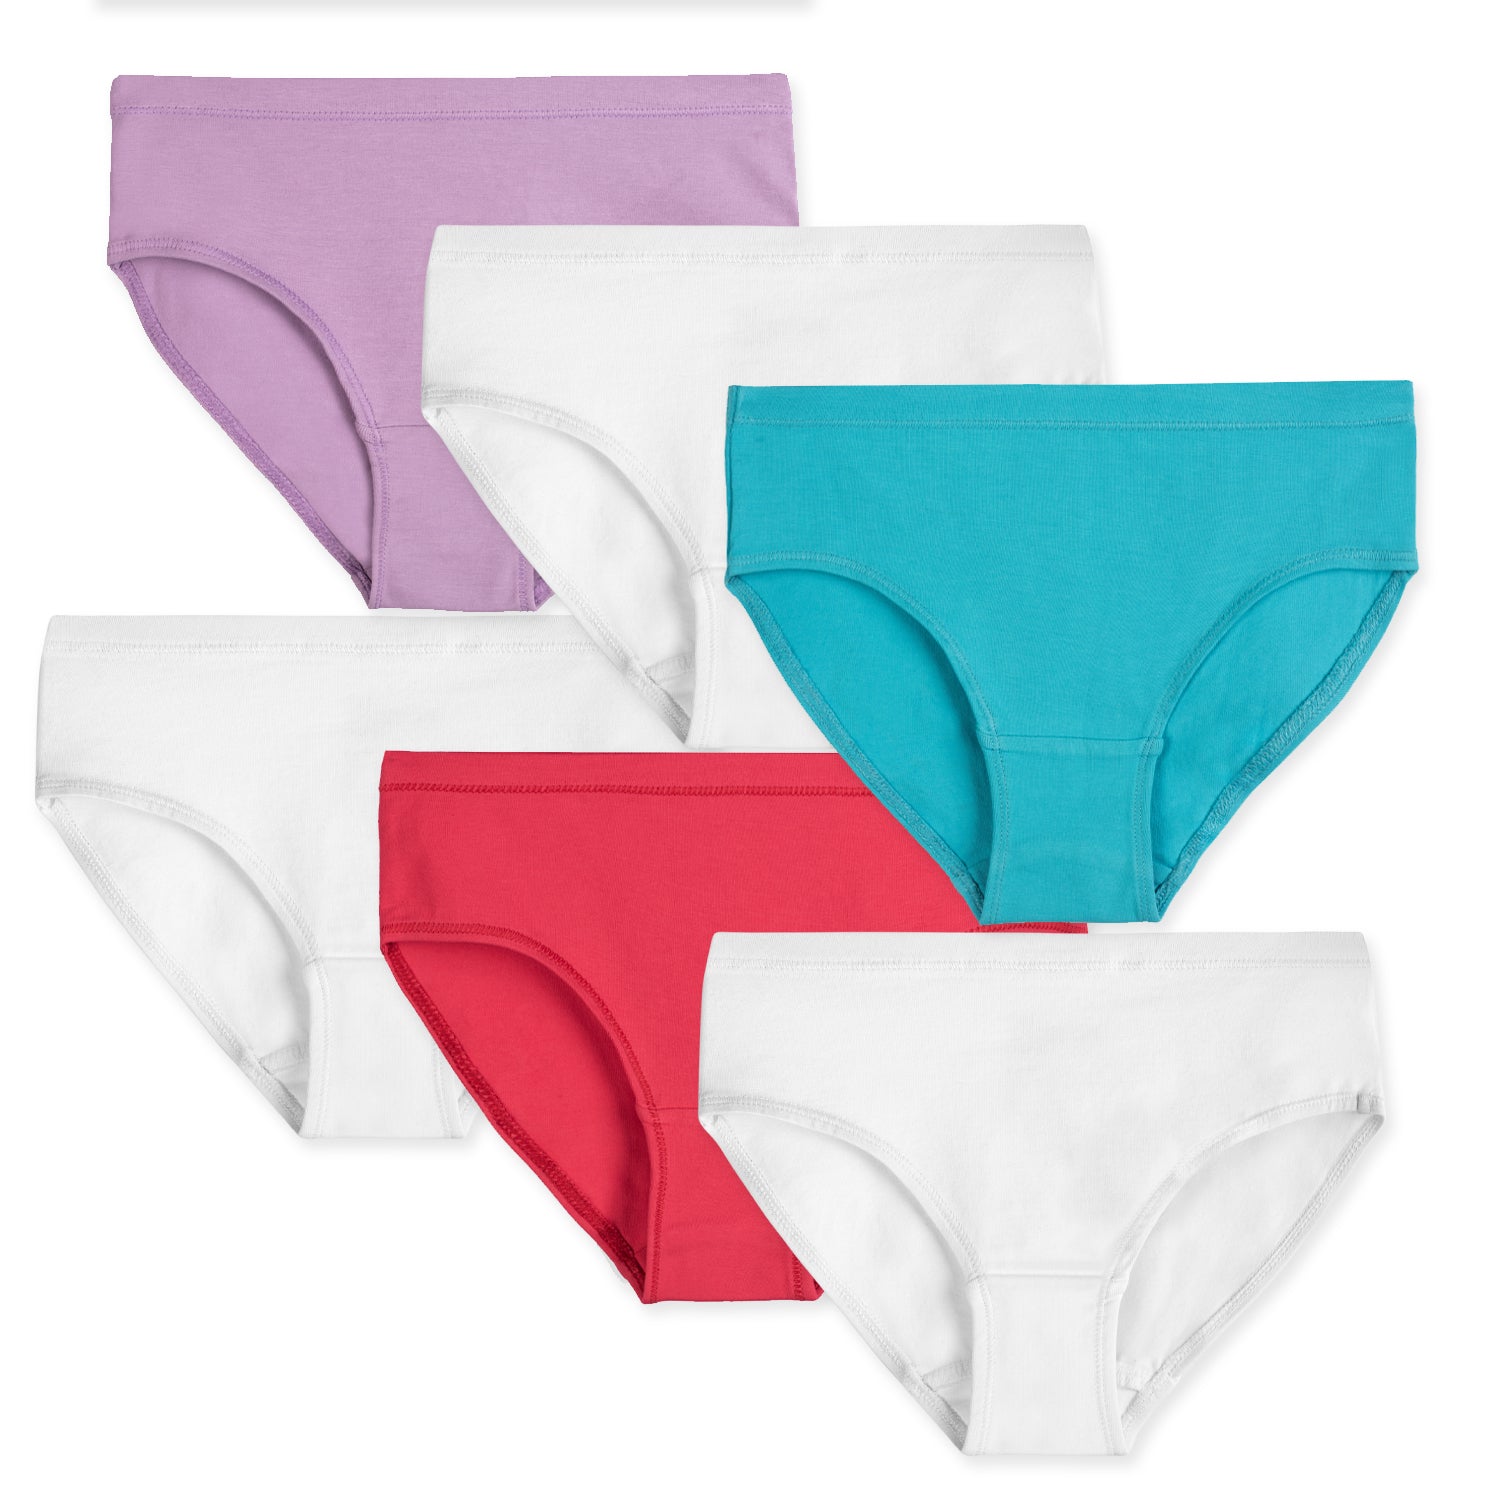  Womens Panties Pack, 100% Cotton Underwear